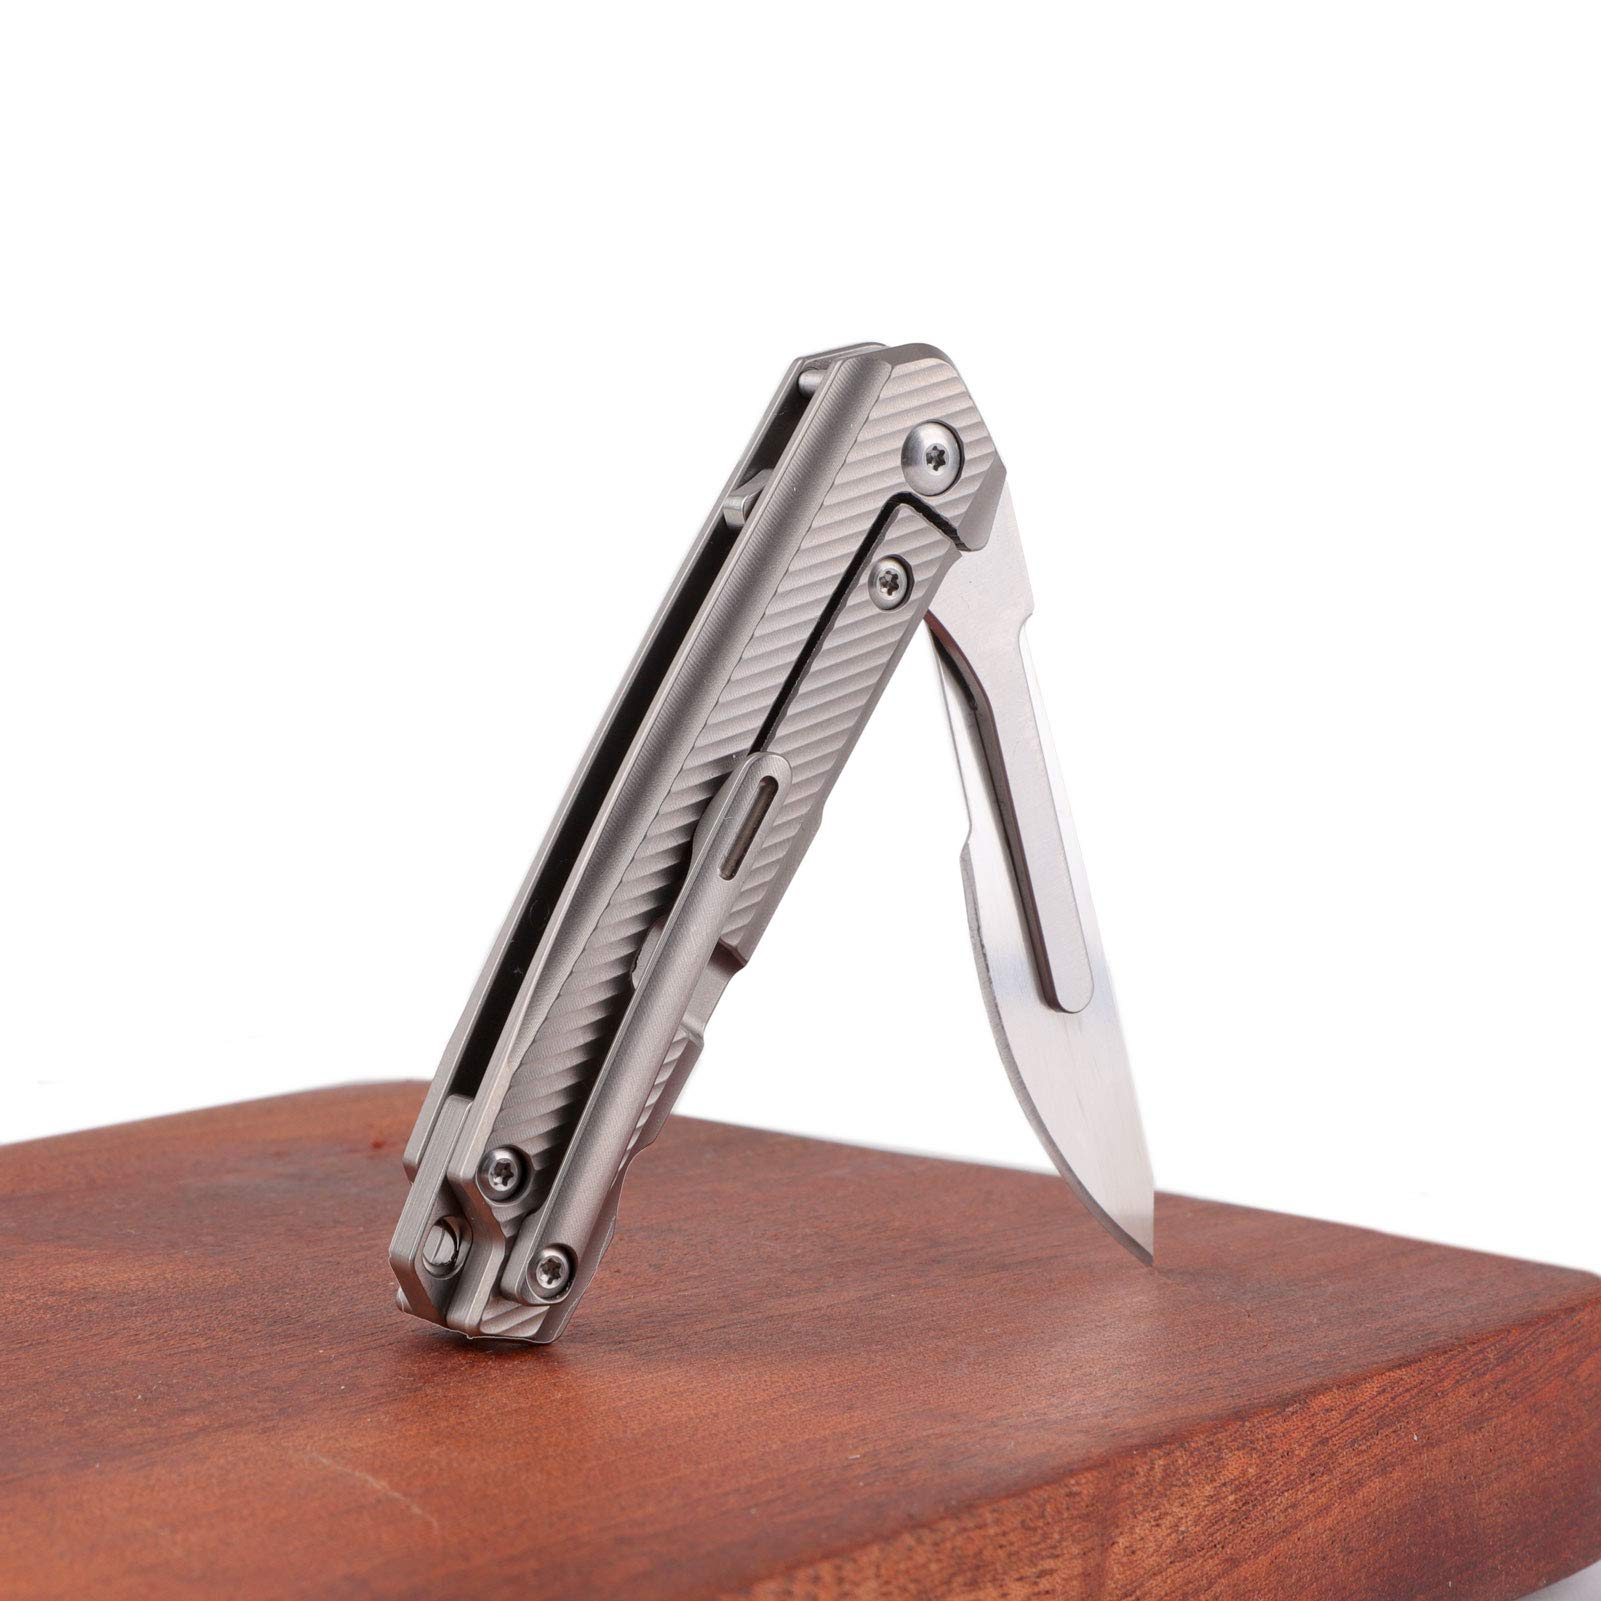 Samior S099 Mini Flipper Scalpel Folding Pocket Knife, 10pcs #24 Replaceable Blade, Highend CNC 6AL4V Titanium Handles Frame Lock Slim Pocket Clip, Utility EDC Keychain Knives, 1.2oz